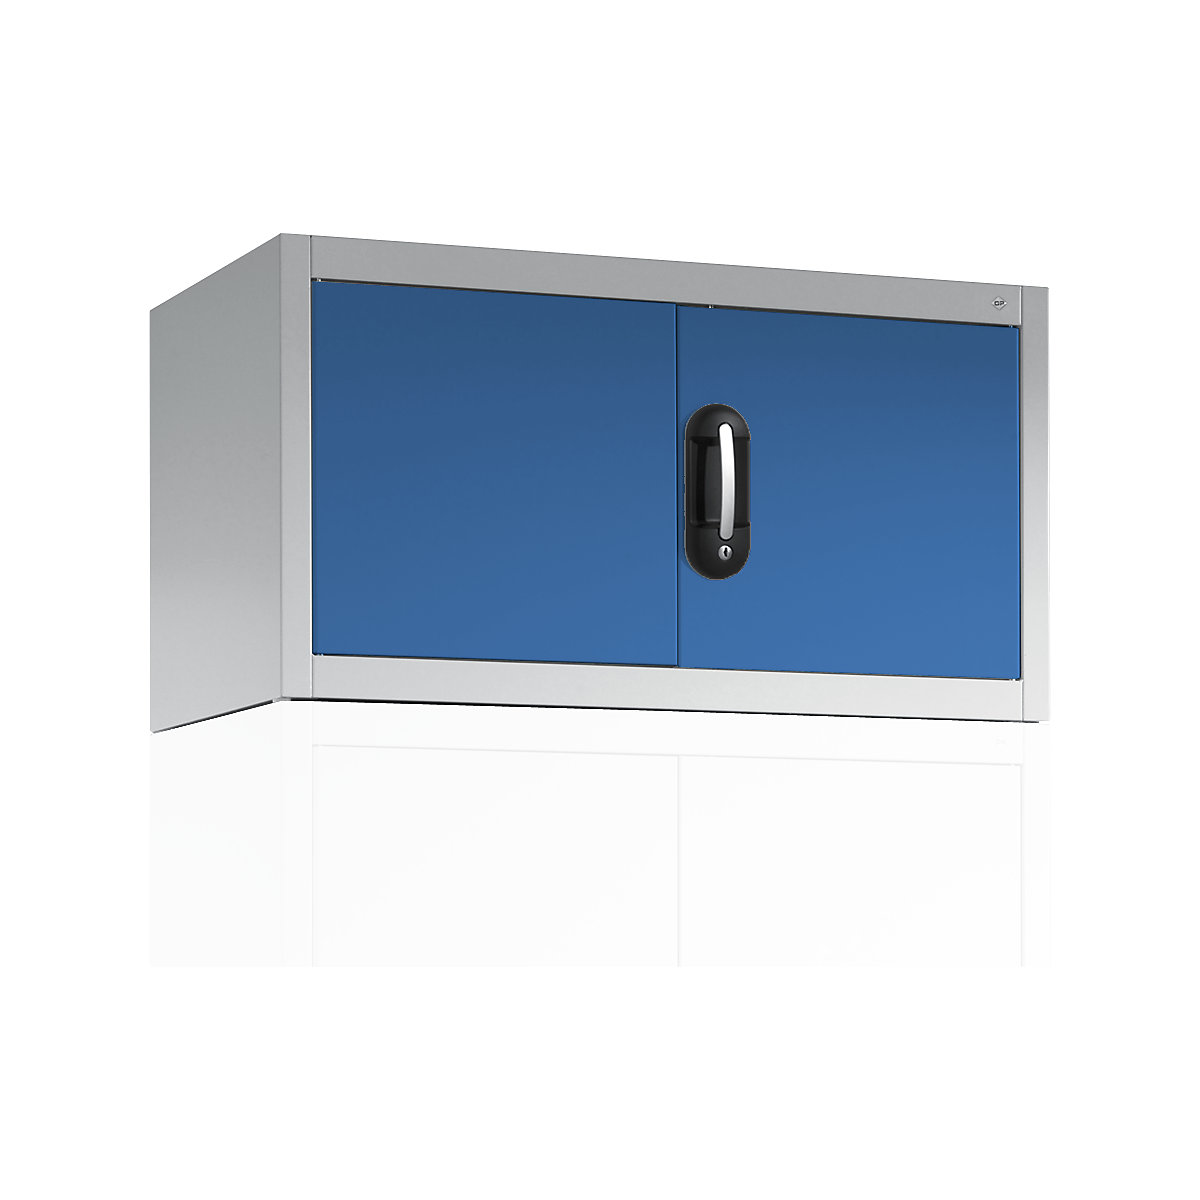 Rehausse ACURADO pour armoires à portes battantes – C+P, h x l x p 500 x 930 x 400 mm, gris clair / bleu clair-6